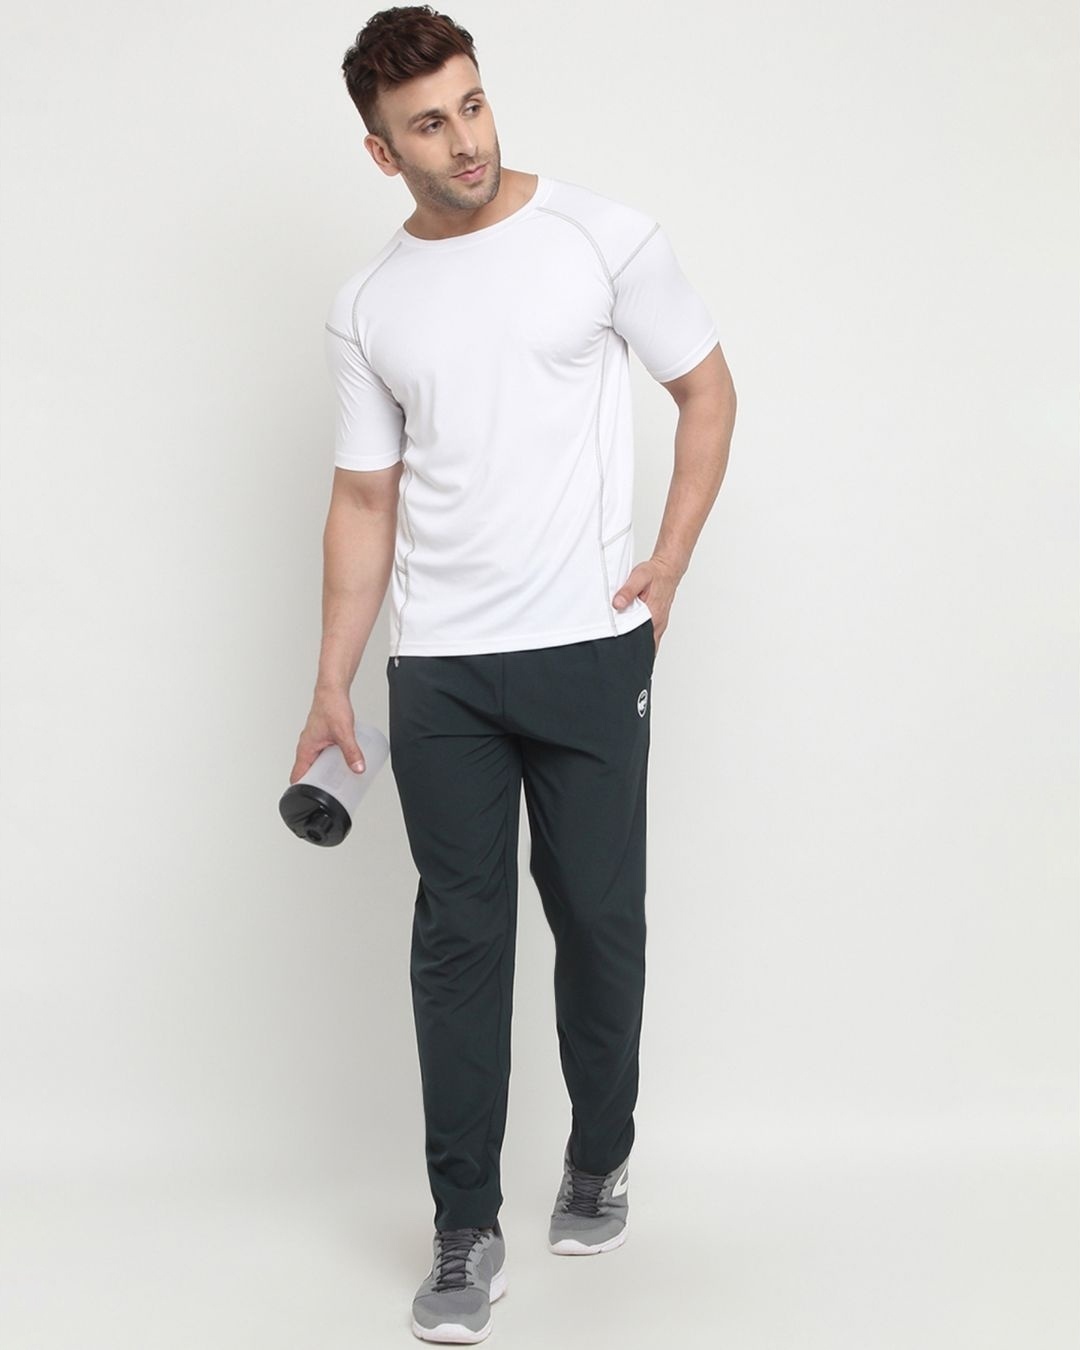 sportswear men pants blank polyester quick| Alibaba.com